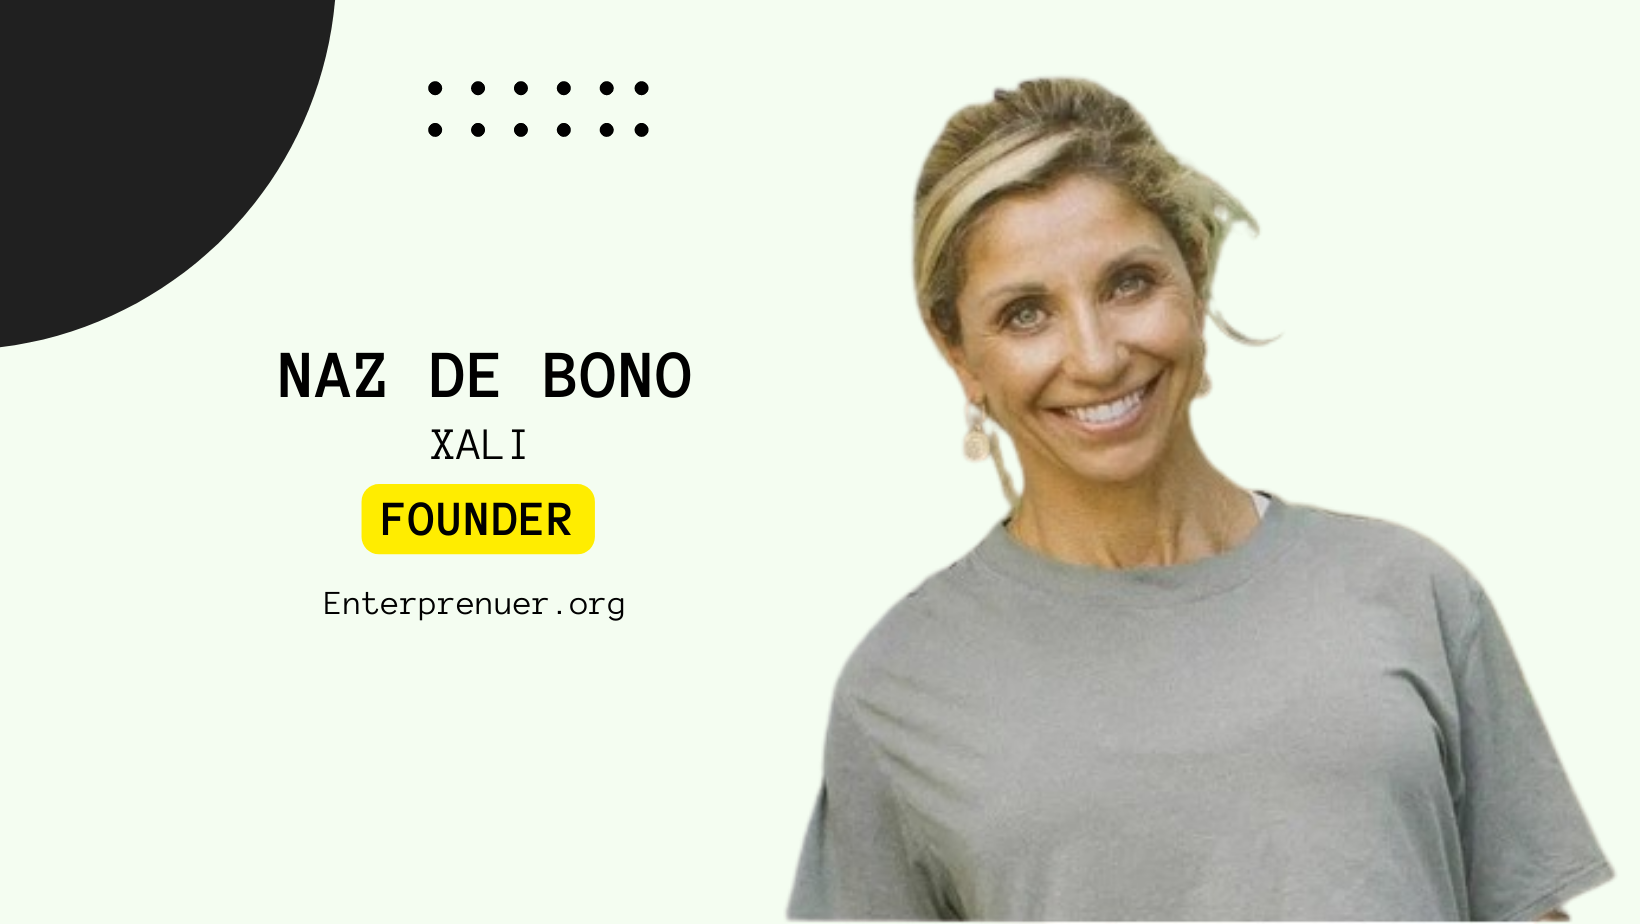 Meet  Naz De Bono, Founder of Xali